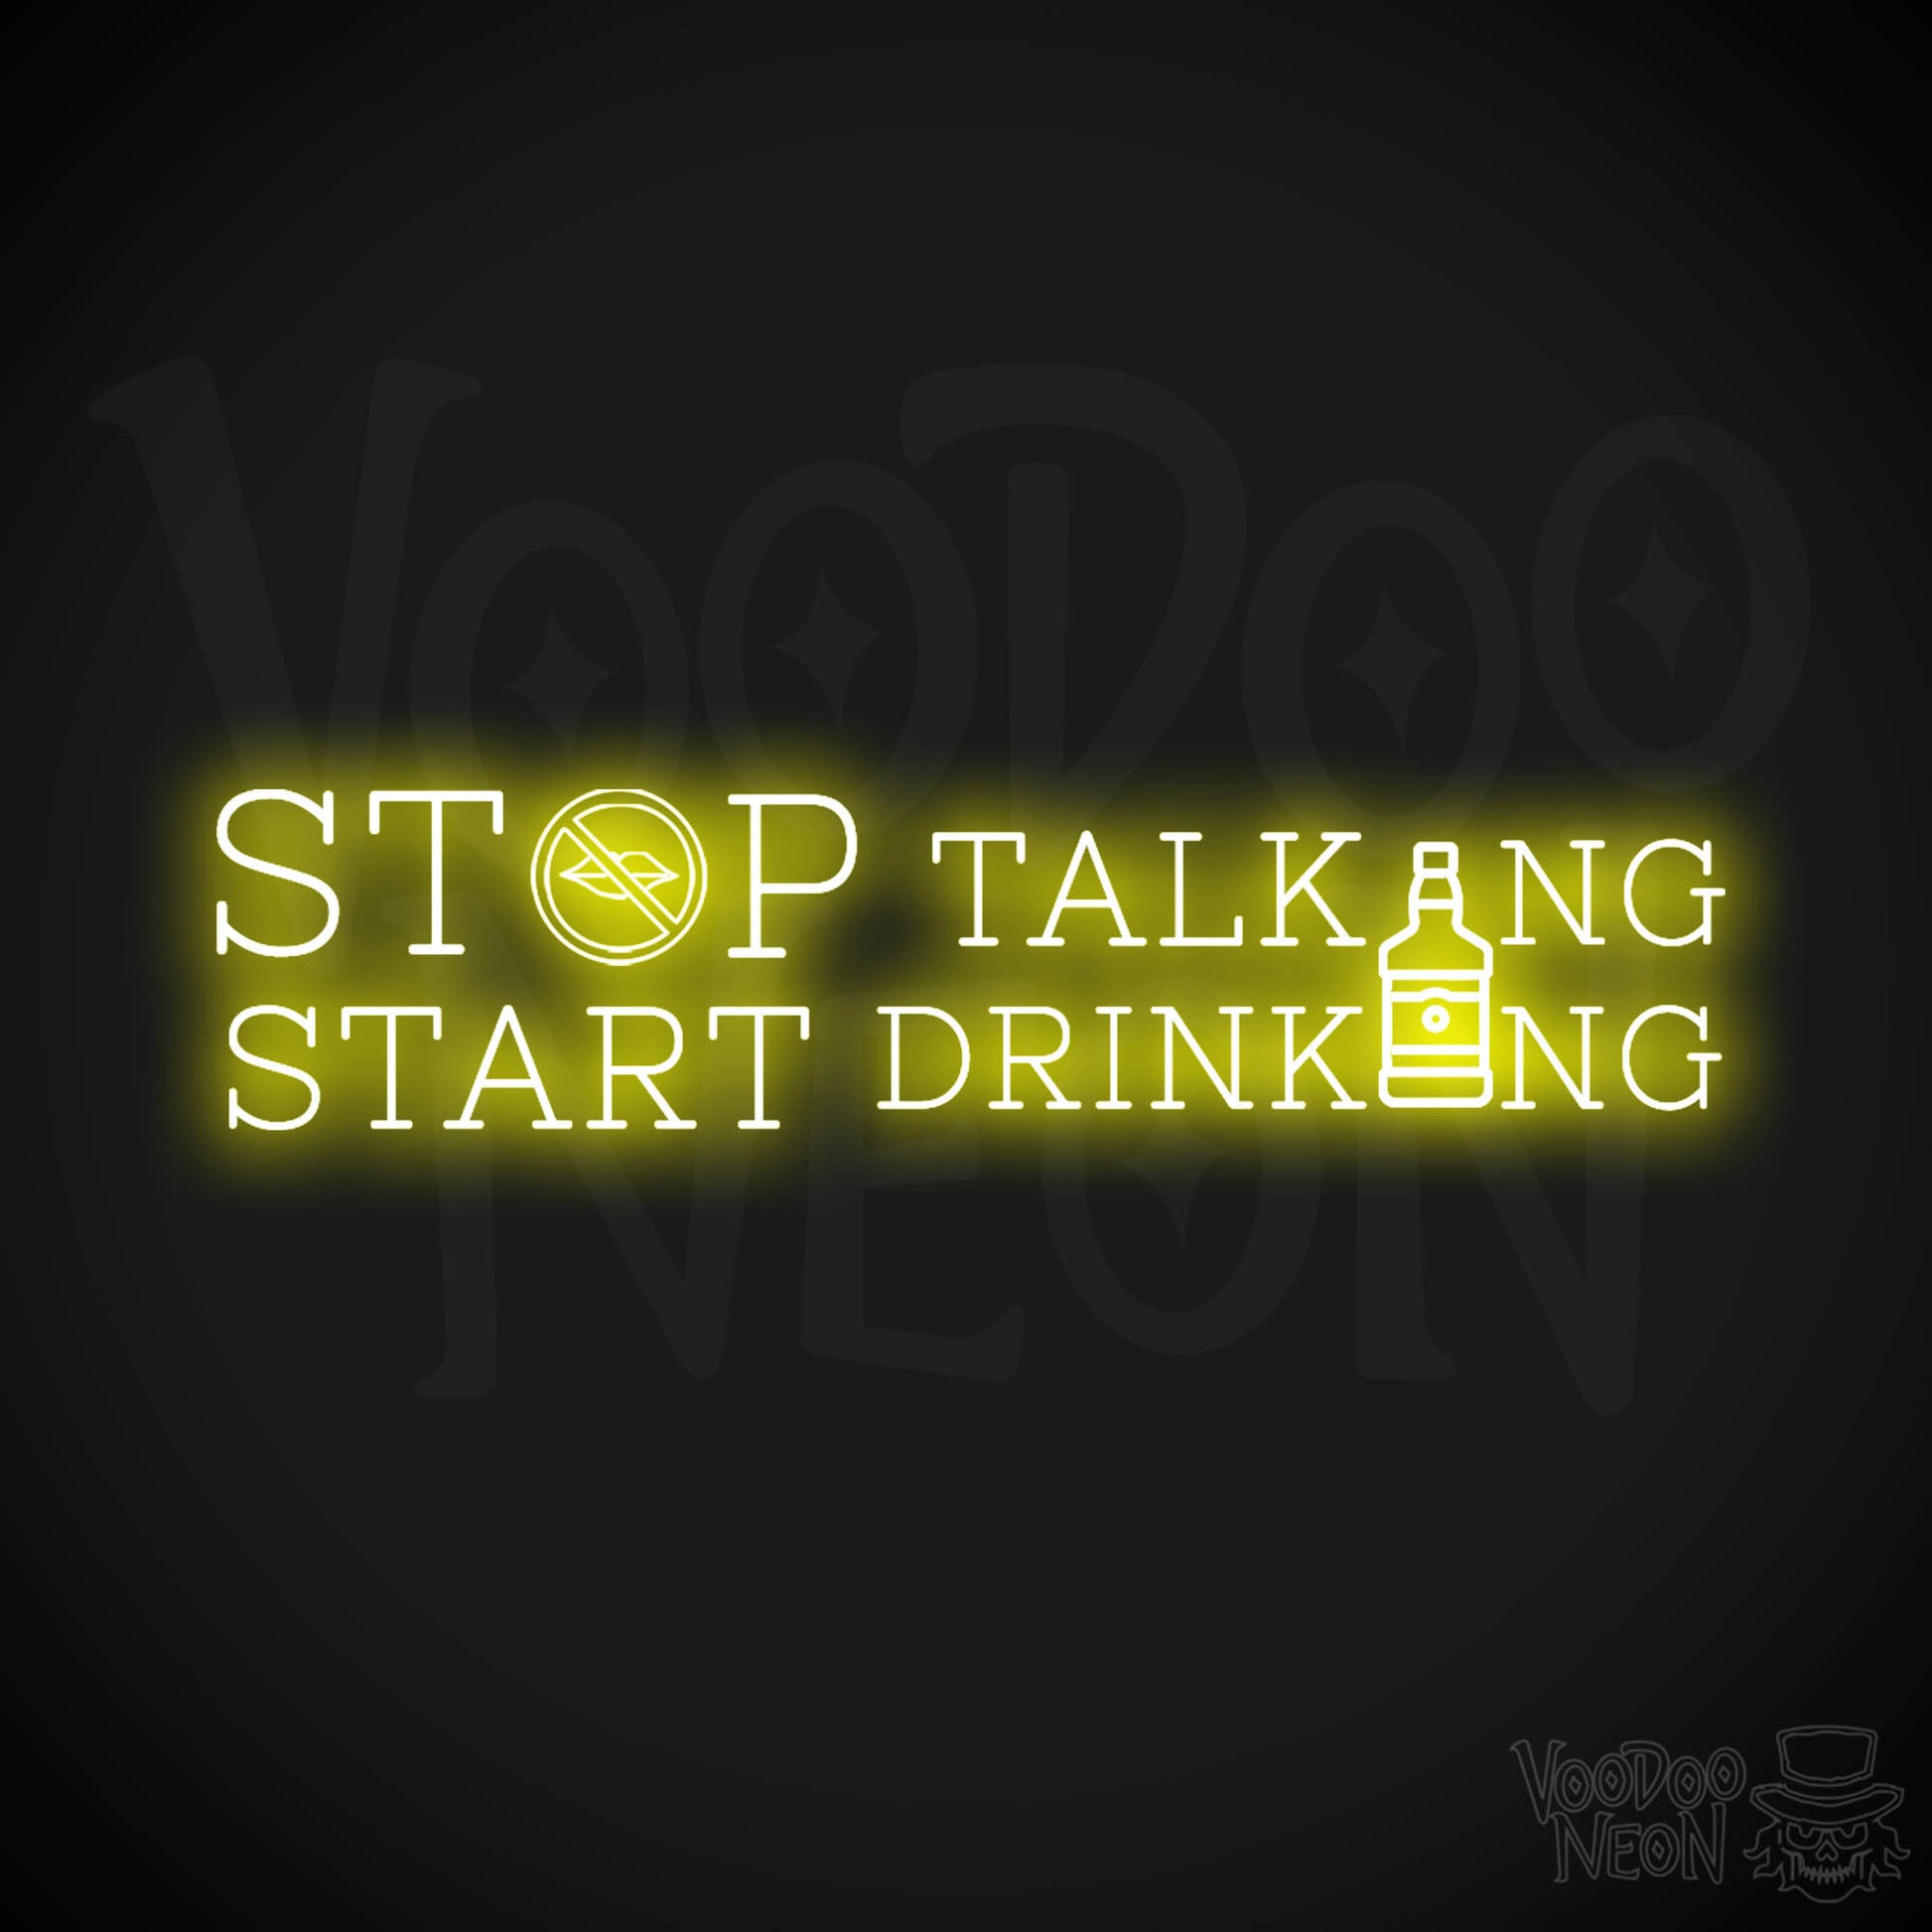 Stop Talking Start Drinking Neon Sign - Stop Talking Start Drinking Sign - Color Yellow